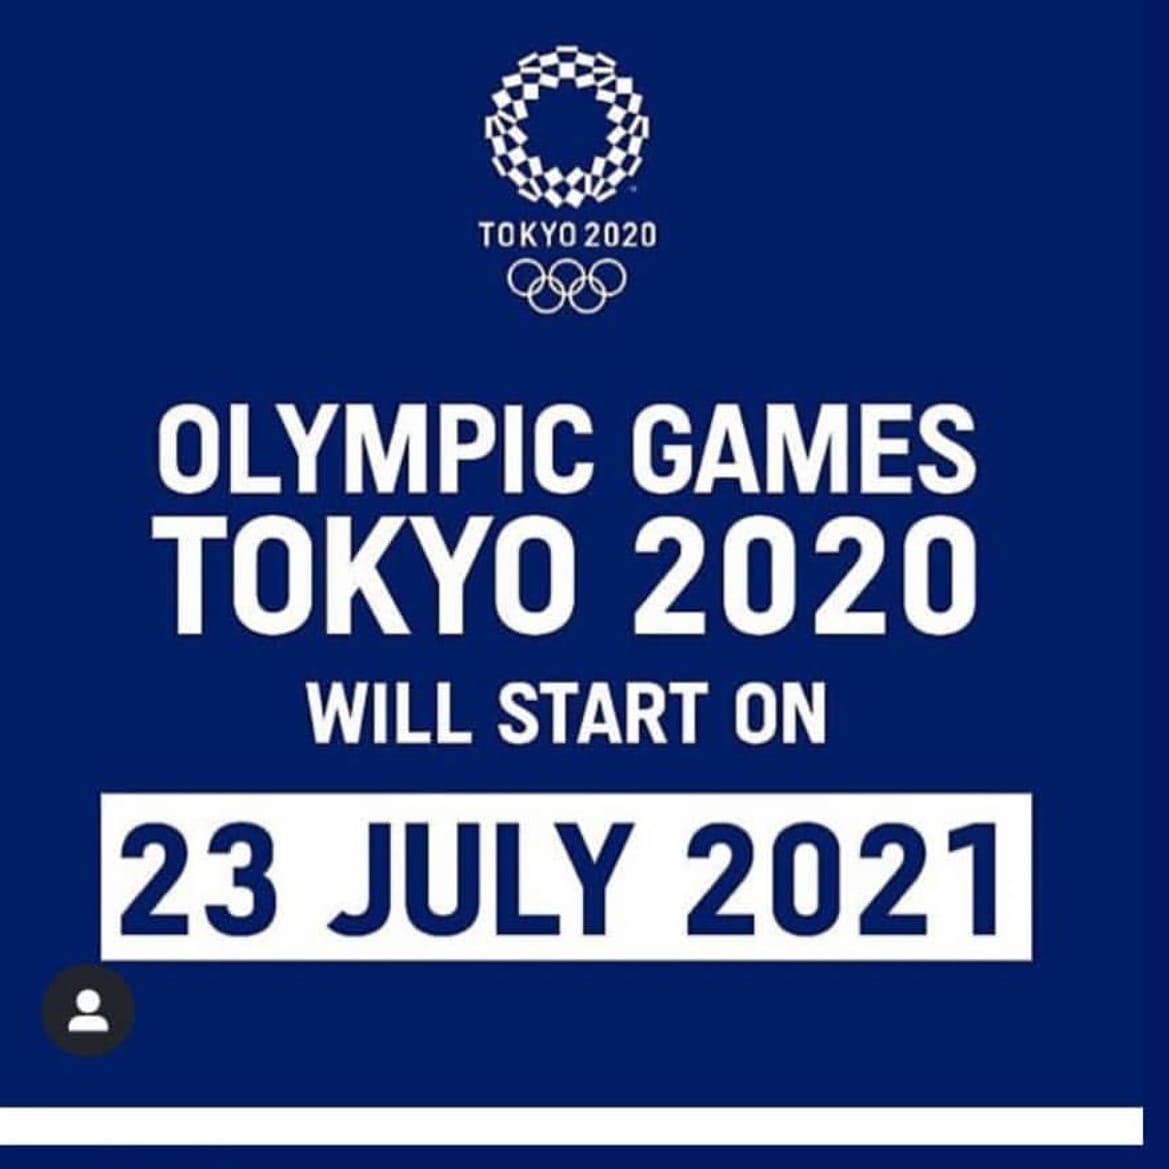 2020 Olympics start July 23, 2021 - Gymnastics Coaching.com